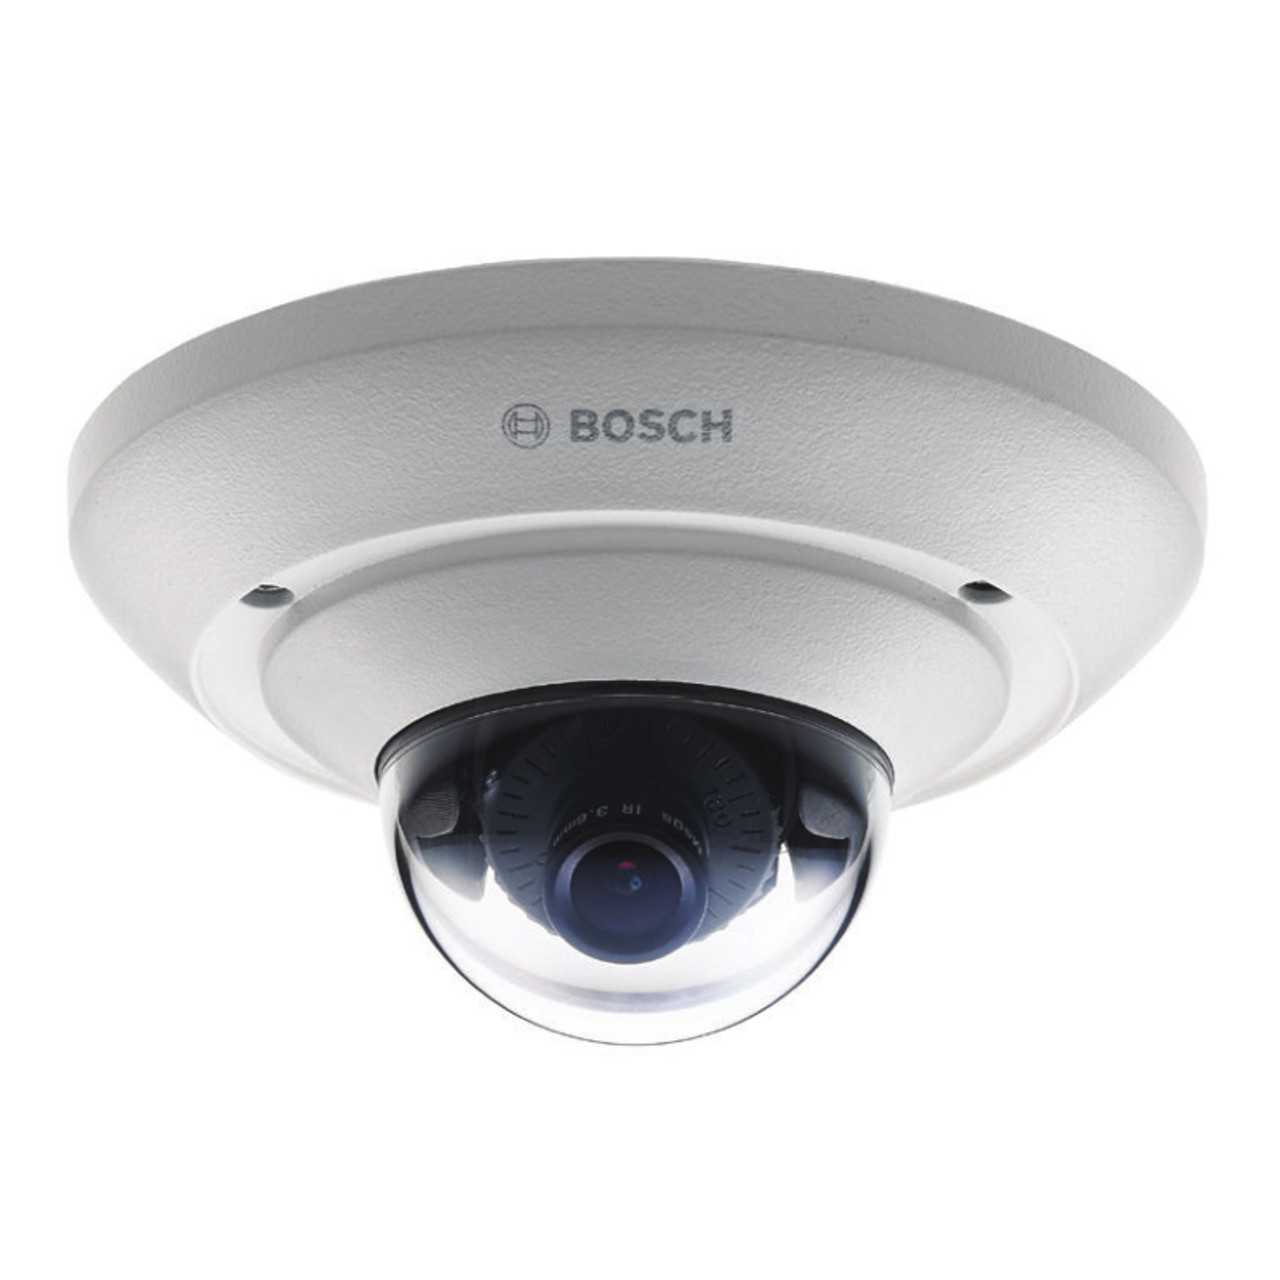 Bosch NUC-51051-F2 Outdoor Dome IP Security Camera